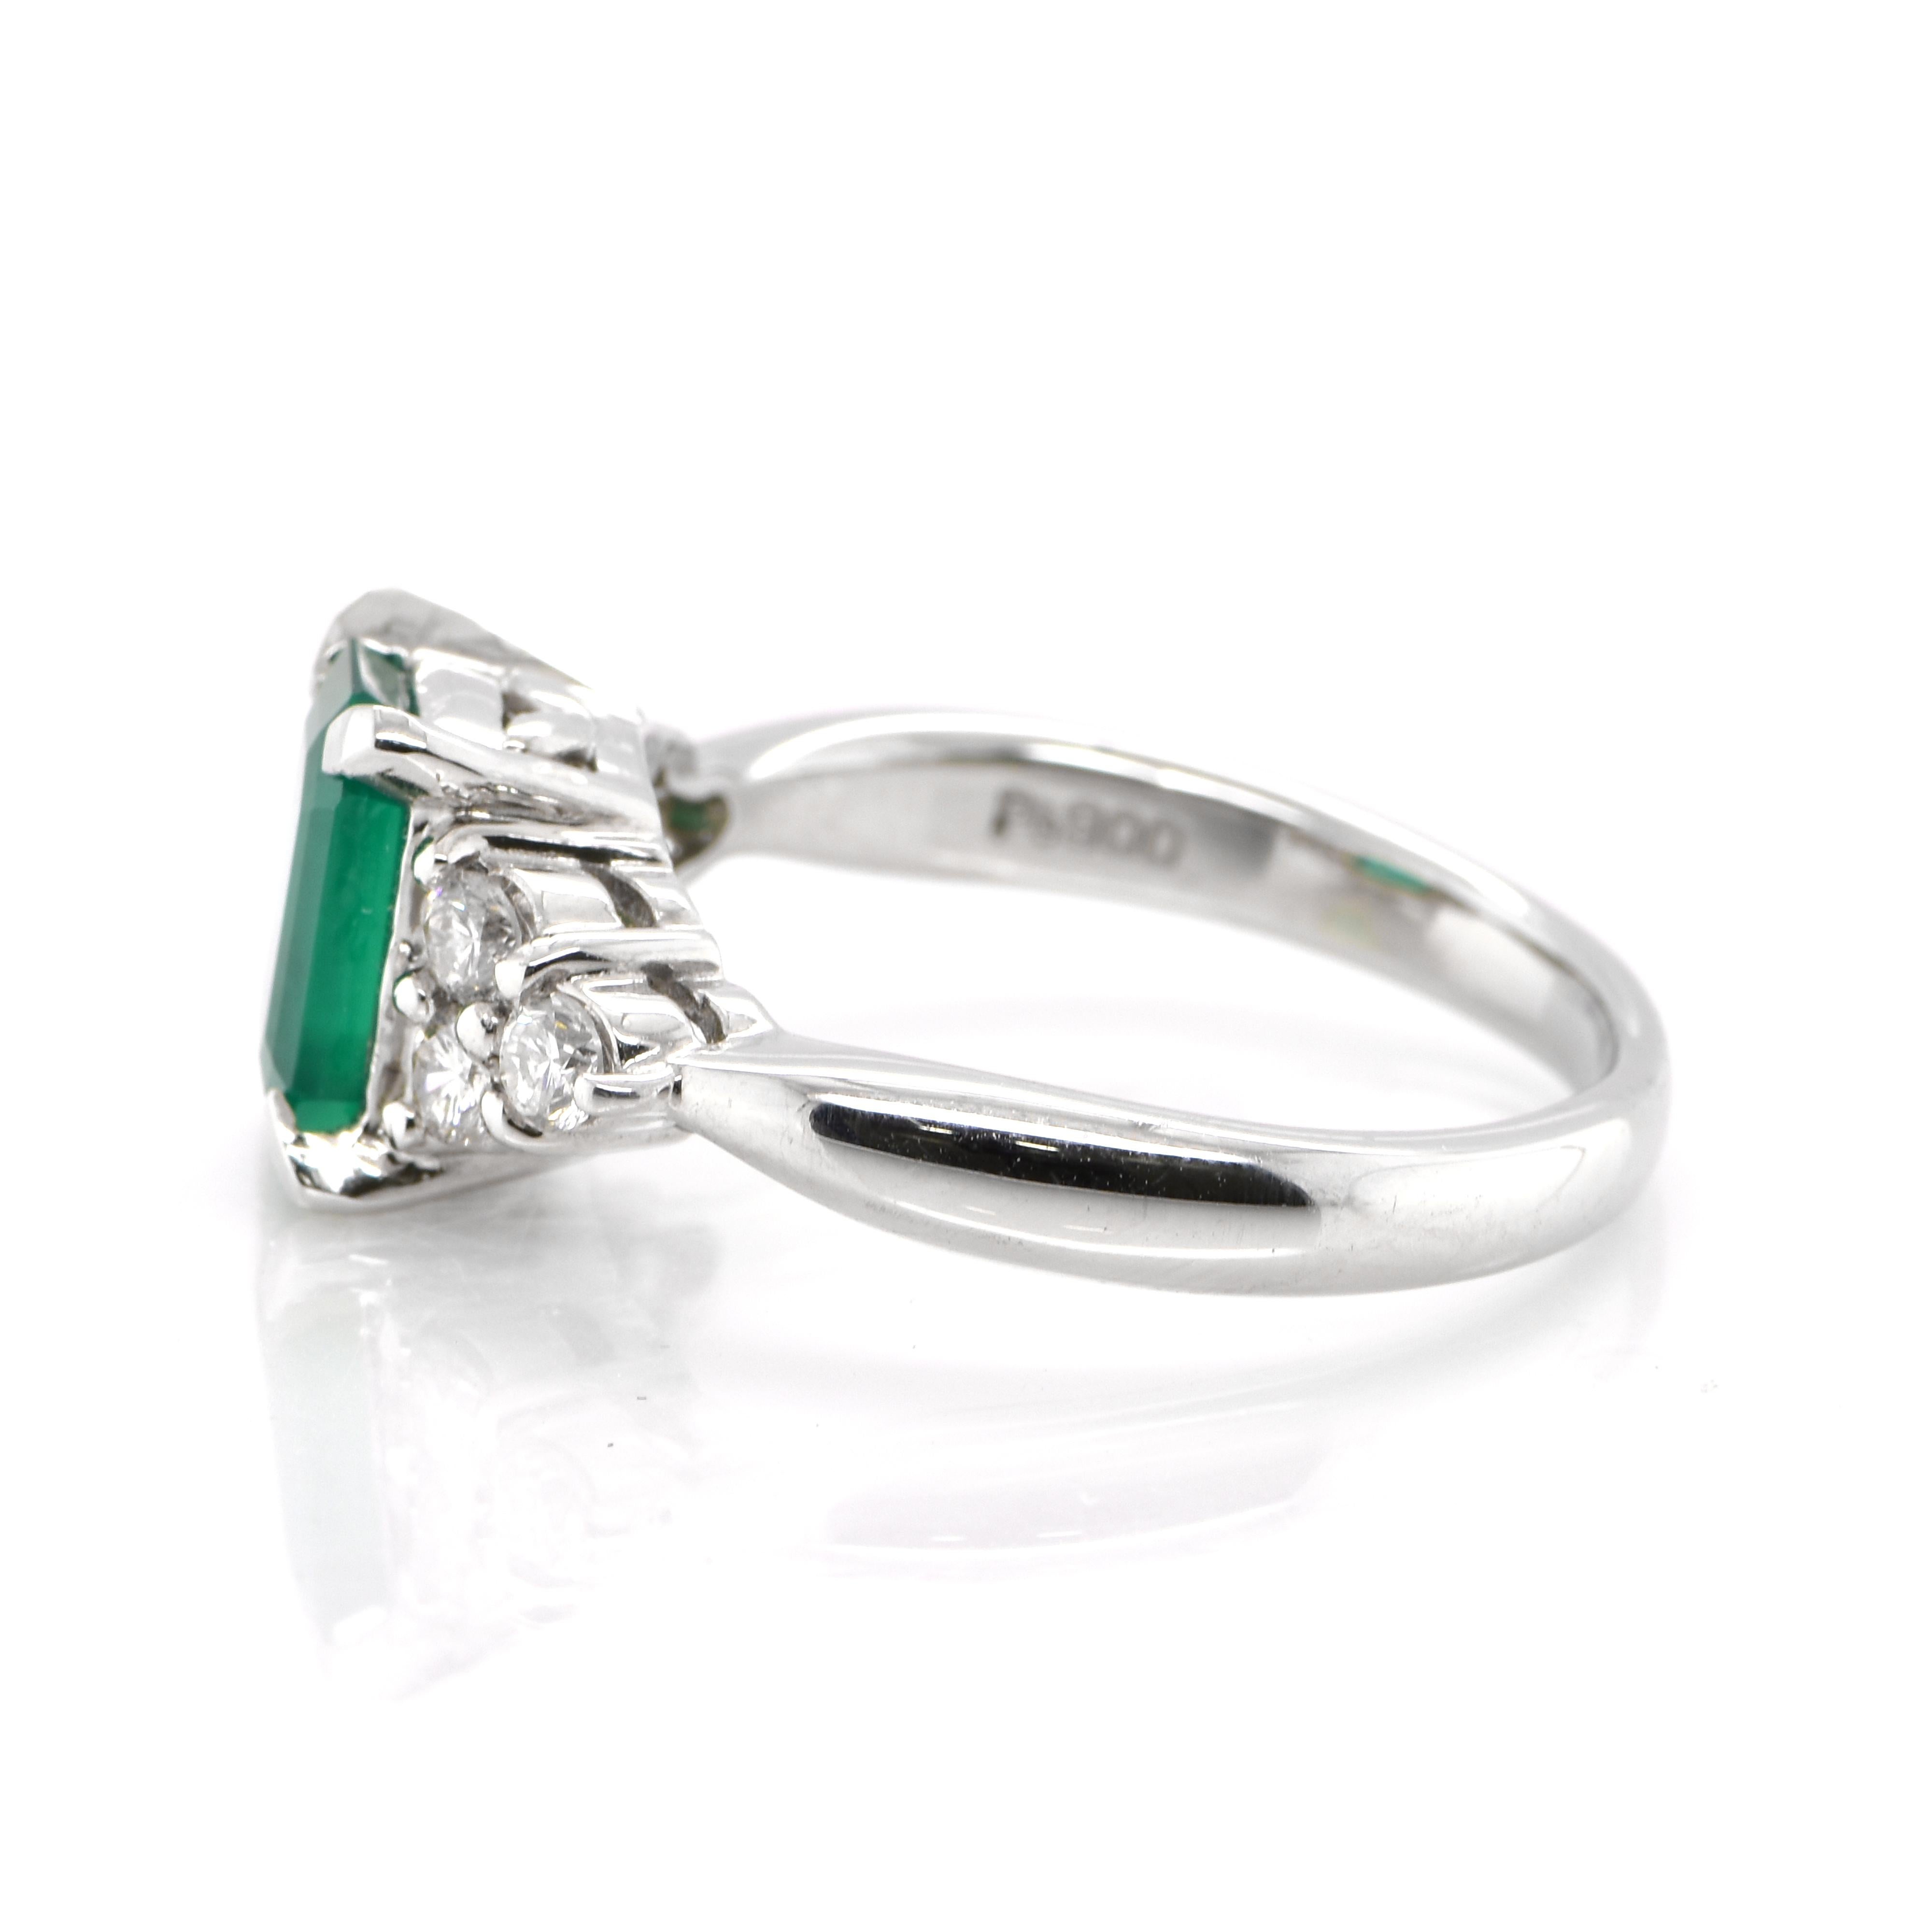 Emerald Cut 1.29 Carat Natural Emerald and Diamond Ring Made in Platinum